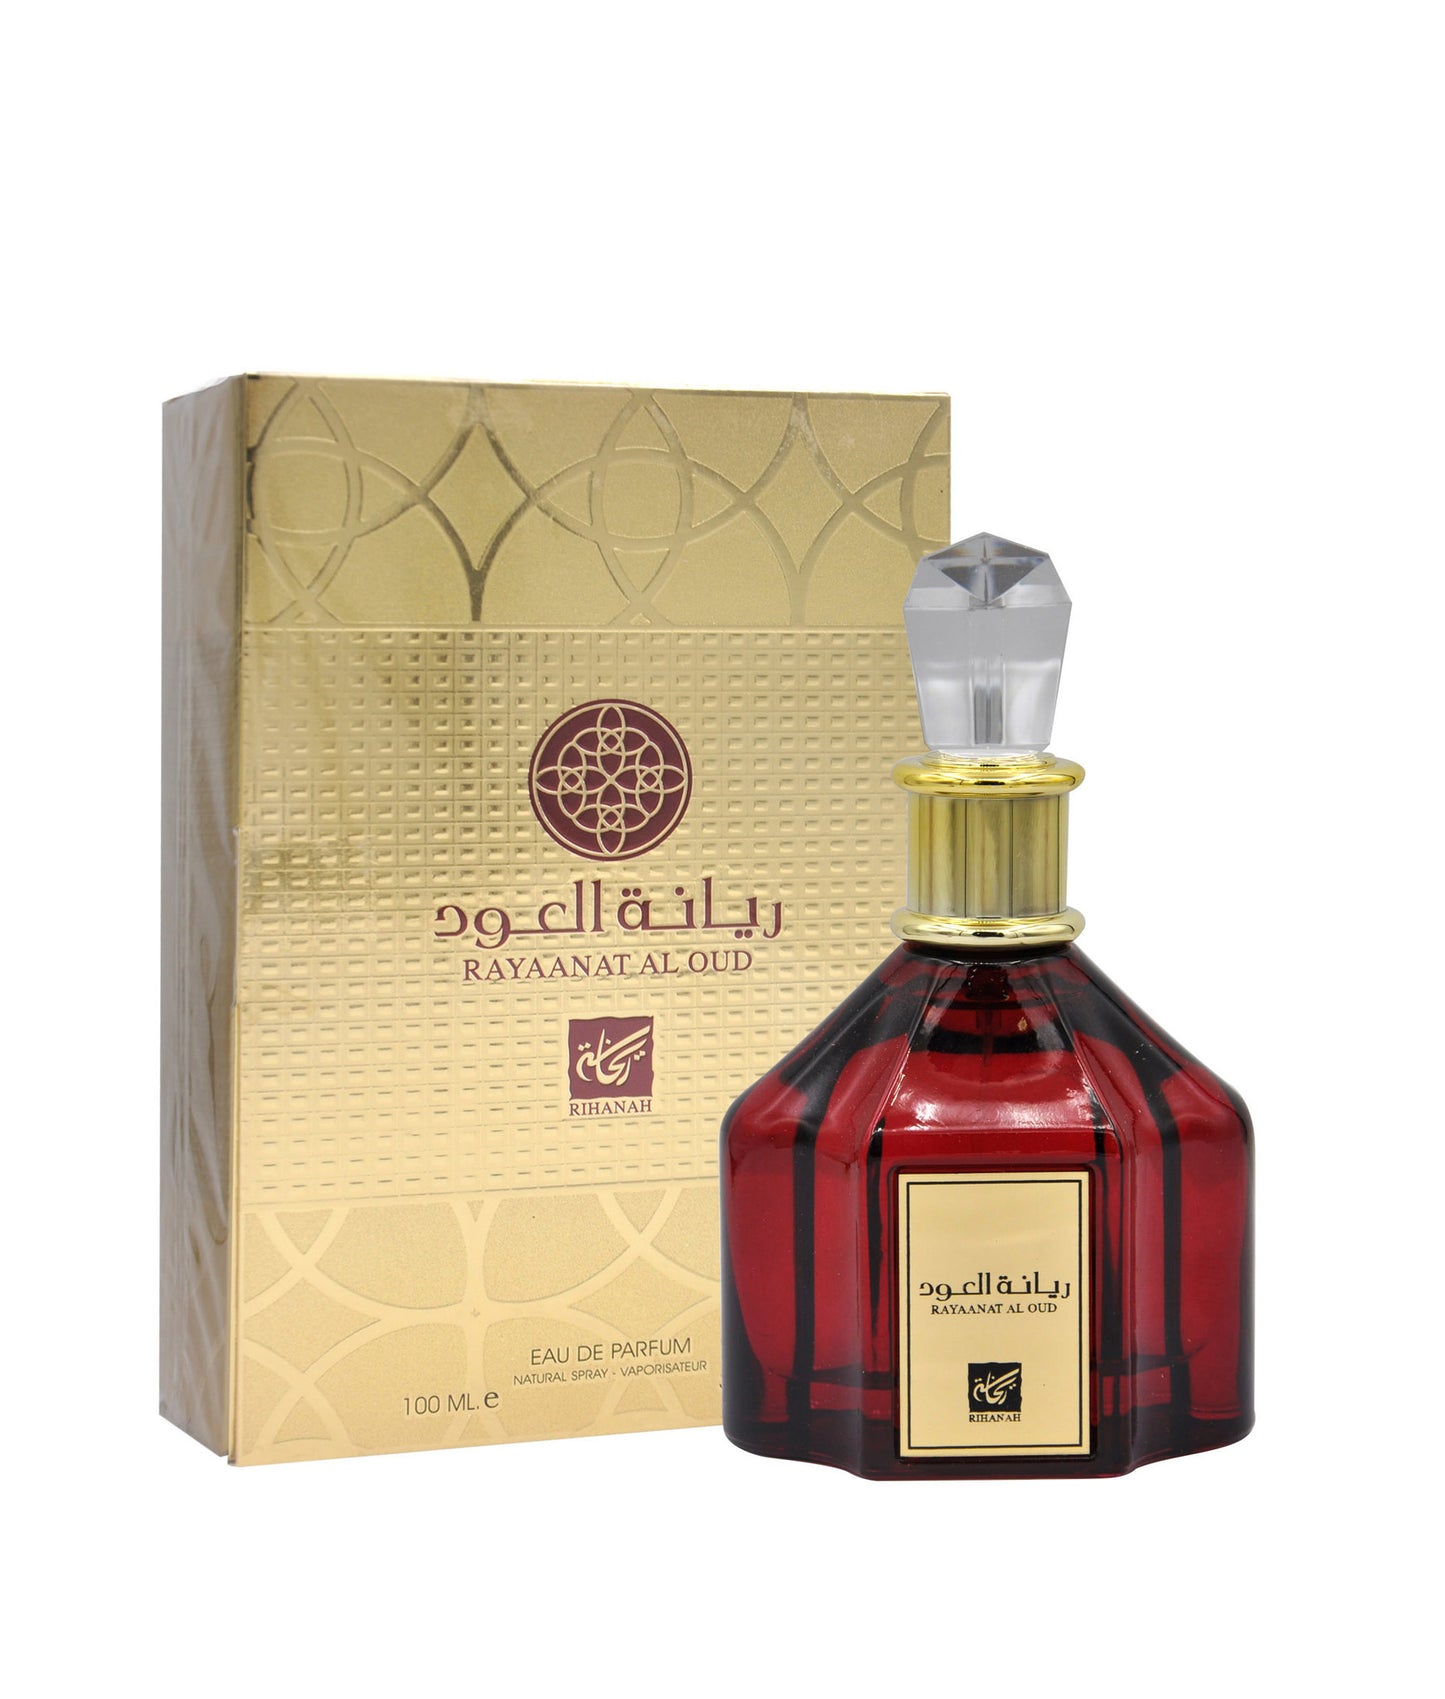 Rayaanat al oud - eau de parfum - 100 ml -Rihanah - De Parfumist.nl - Online Parfumerie